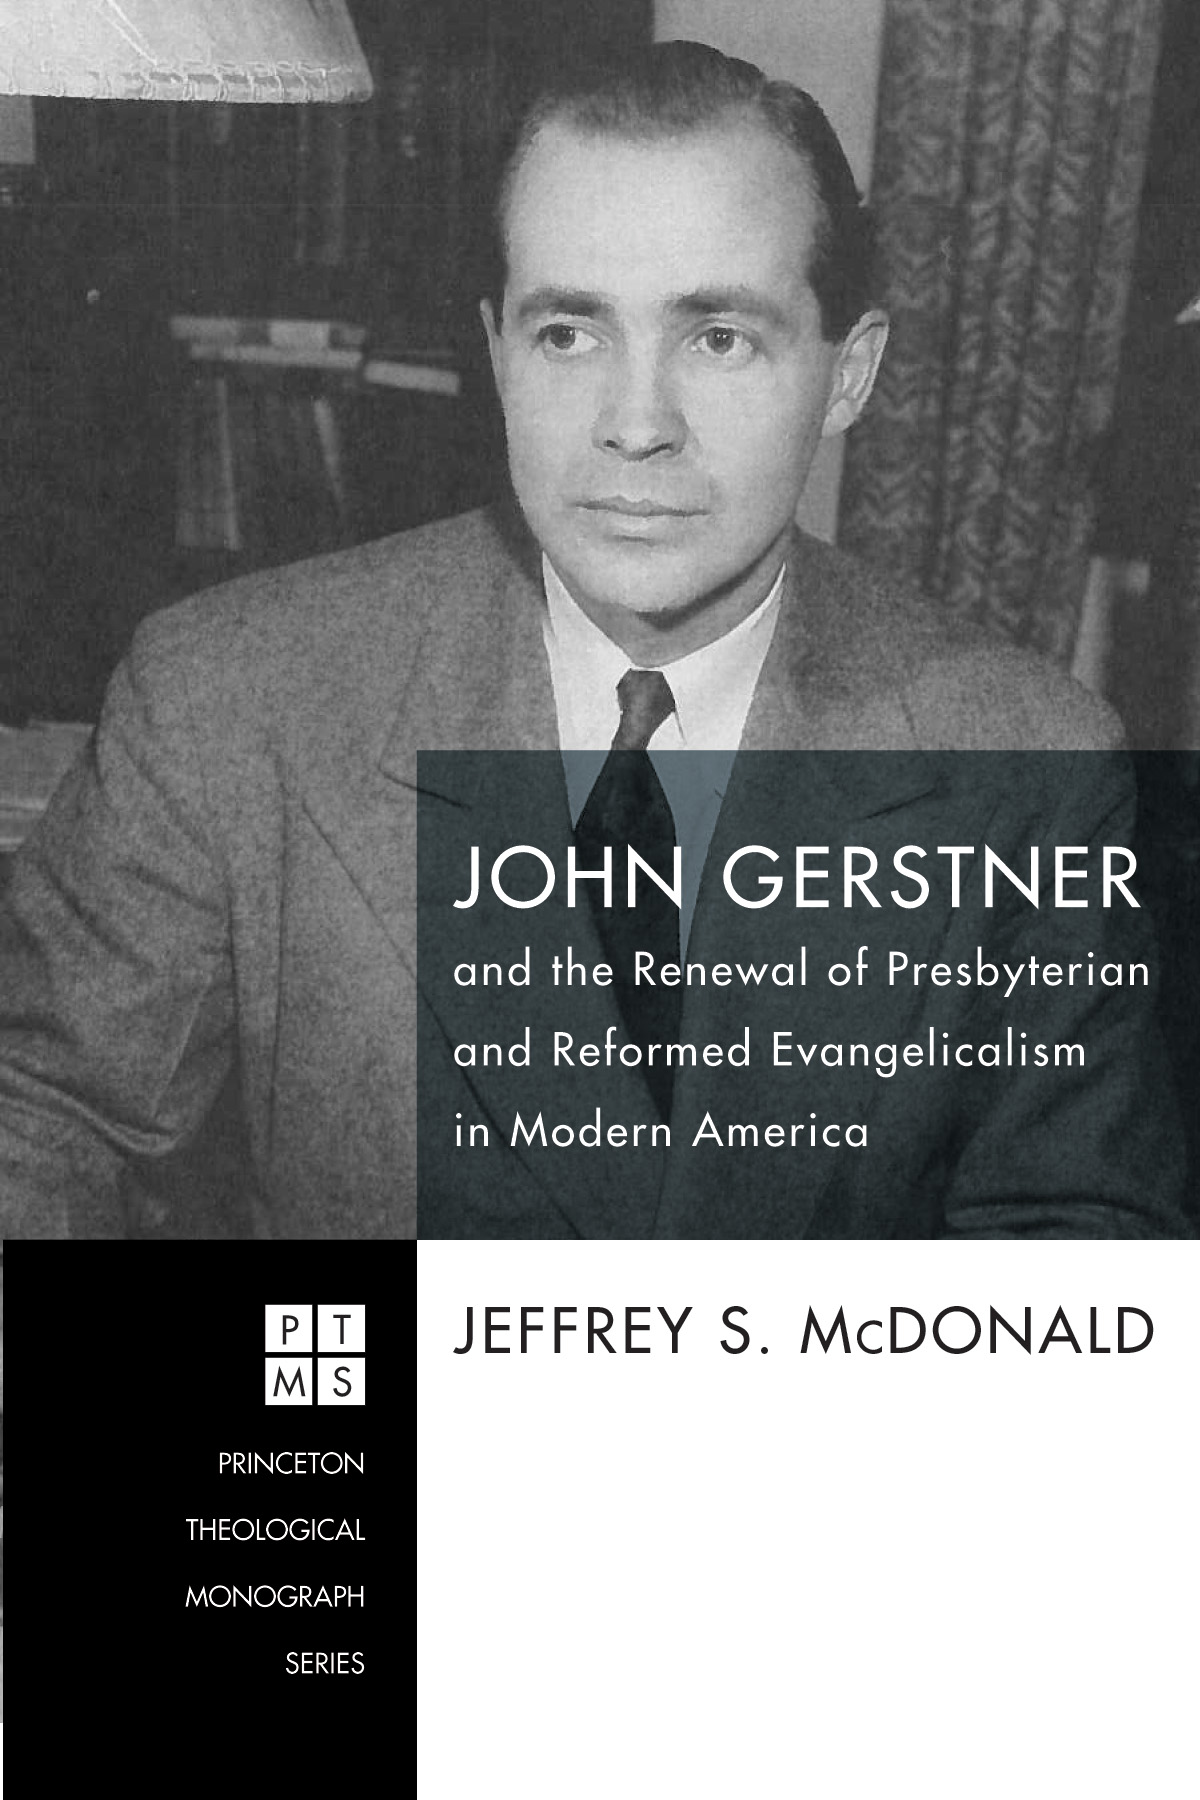 Review of Jeffrey McDonald’s biography of John Gerstner